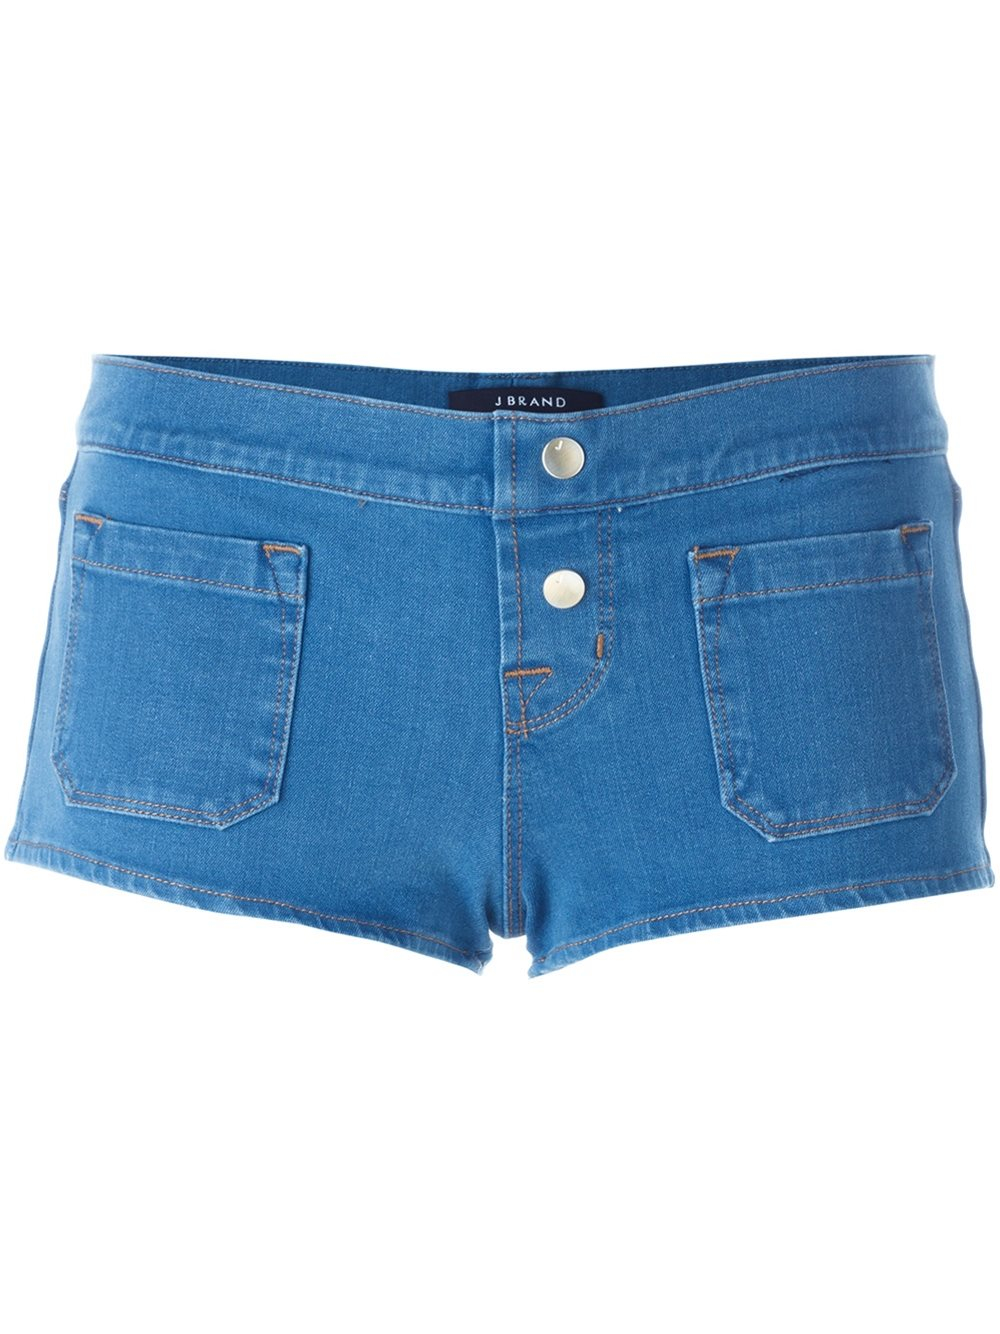 J Brand Denim Micro Shorts in Blue - Lyst